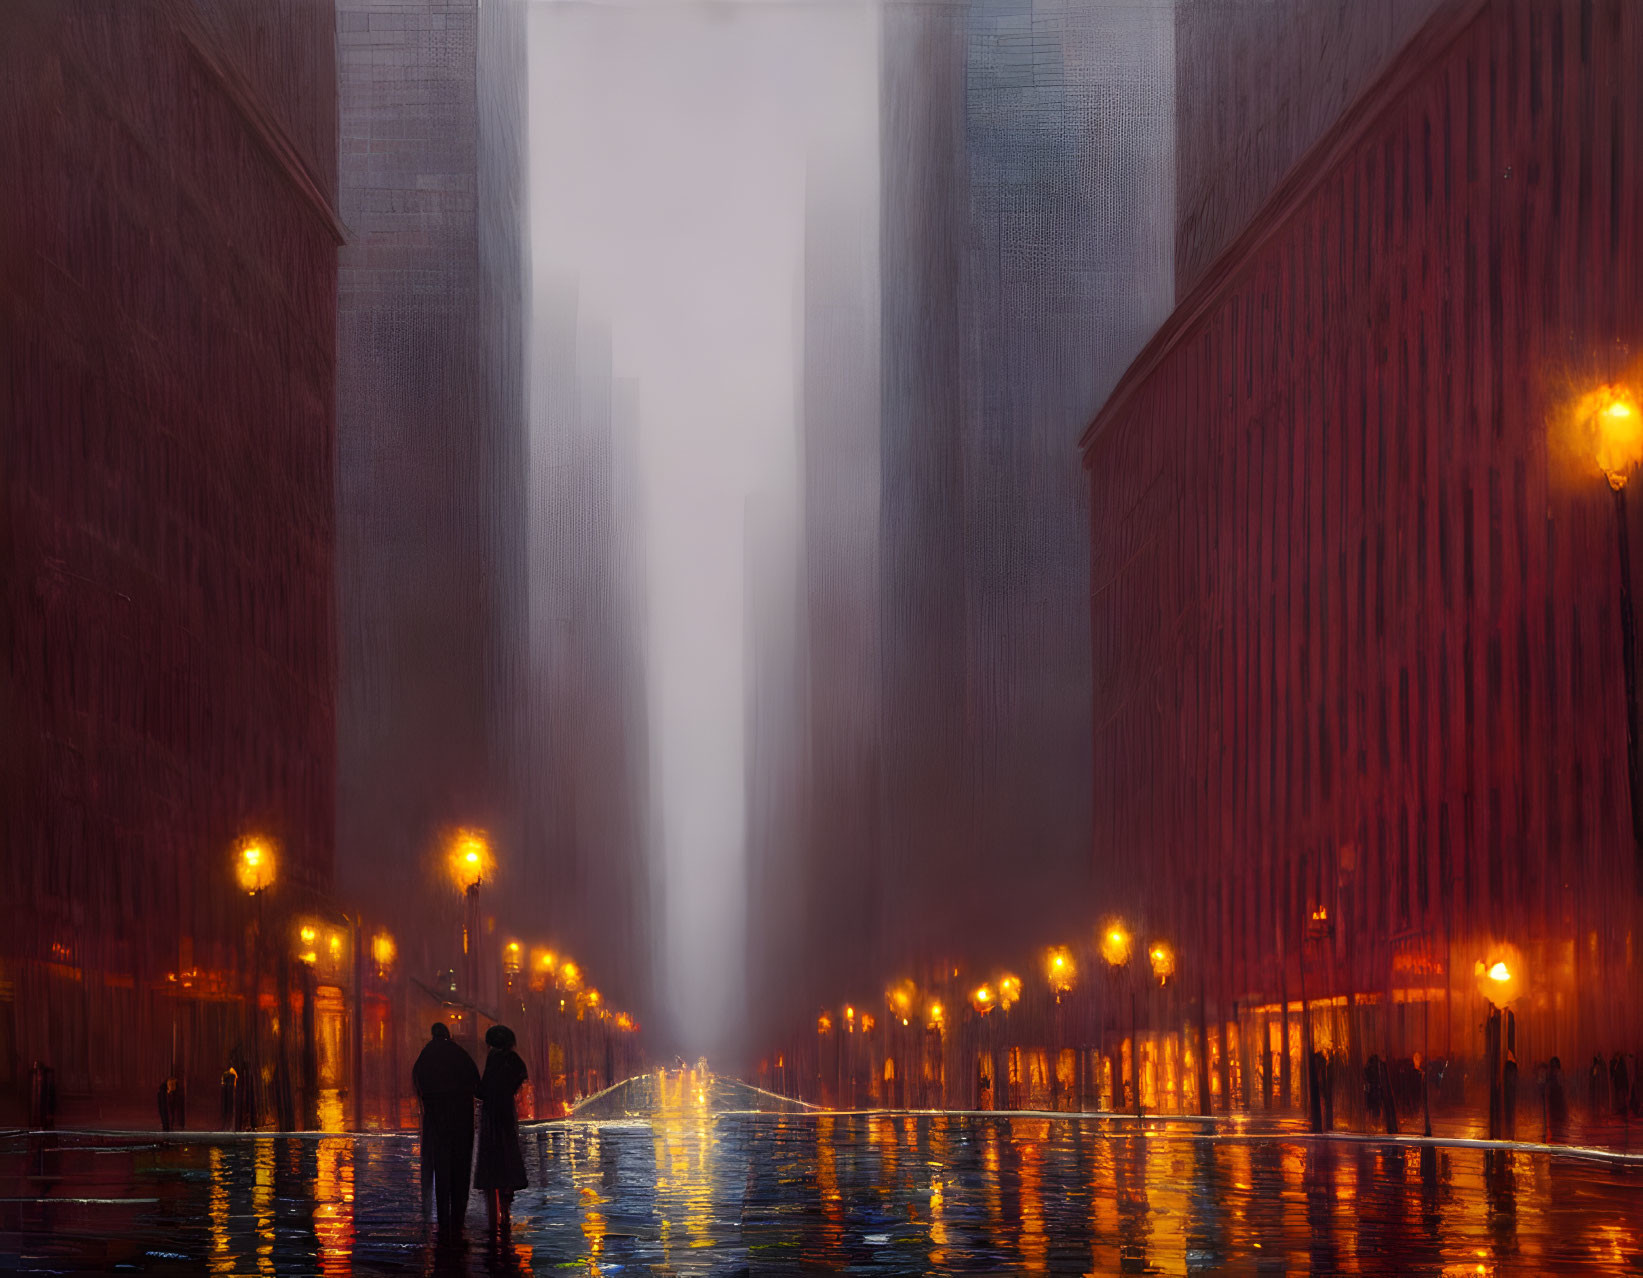 Couple standing on wet street amid tall buildings and streetlights under hazy, foggy sky